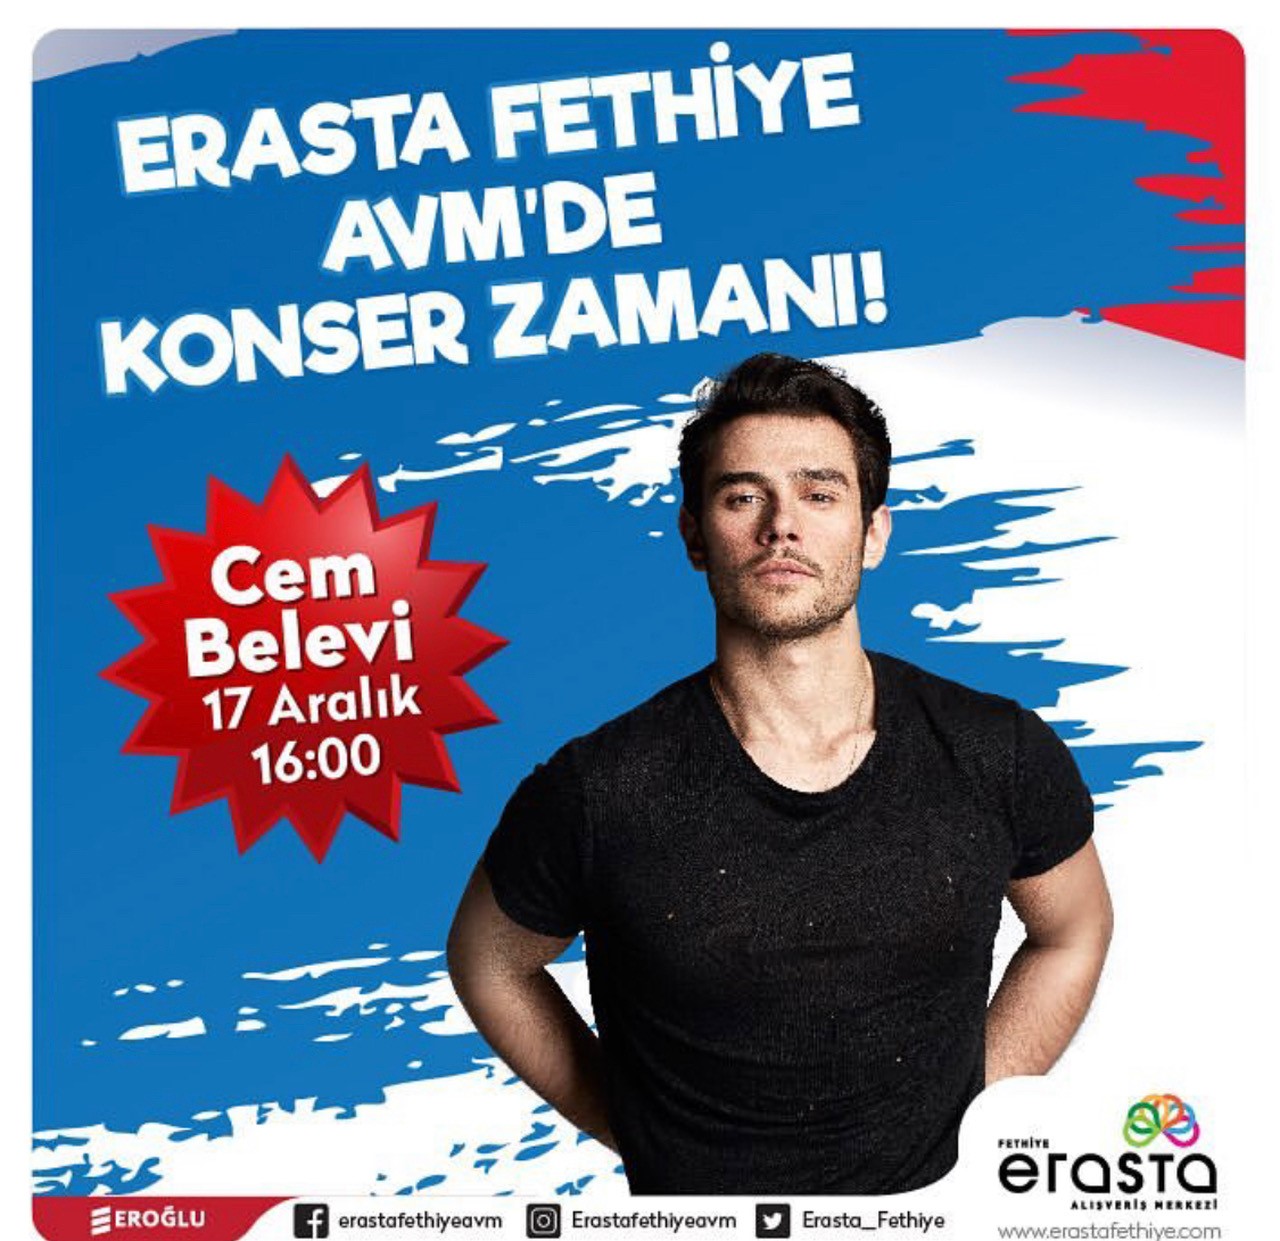 Erasta Fethiye AVM’de Konser Zamanı!